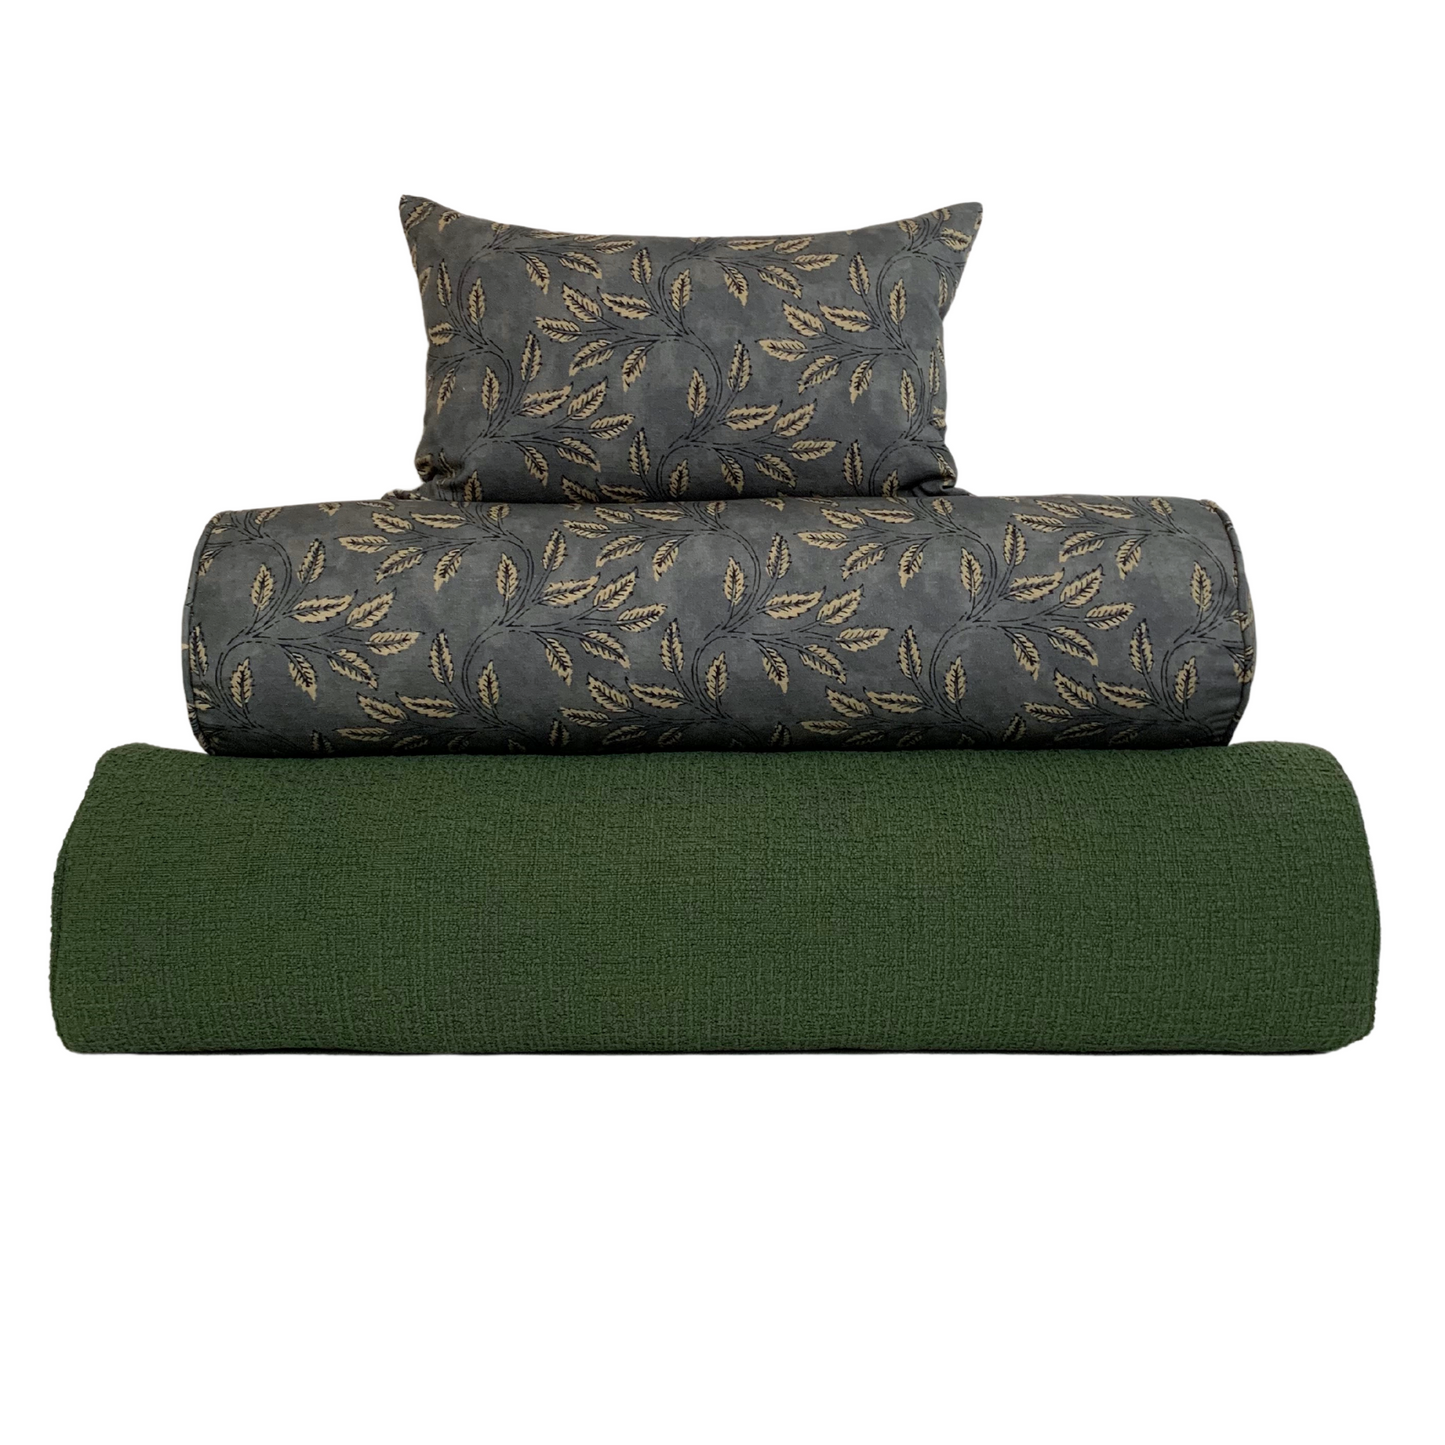 Moss Green Textured Pillow Cover | Organic Modern Decor | Available in Bolster, Lumbar, Throw, Euro Sham Sizes